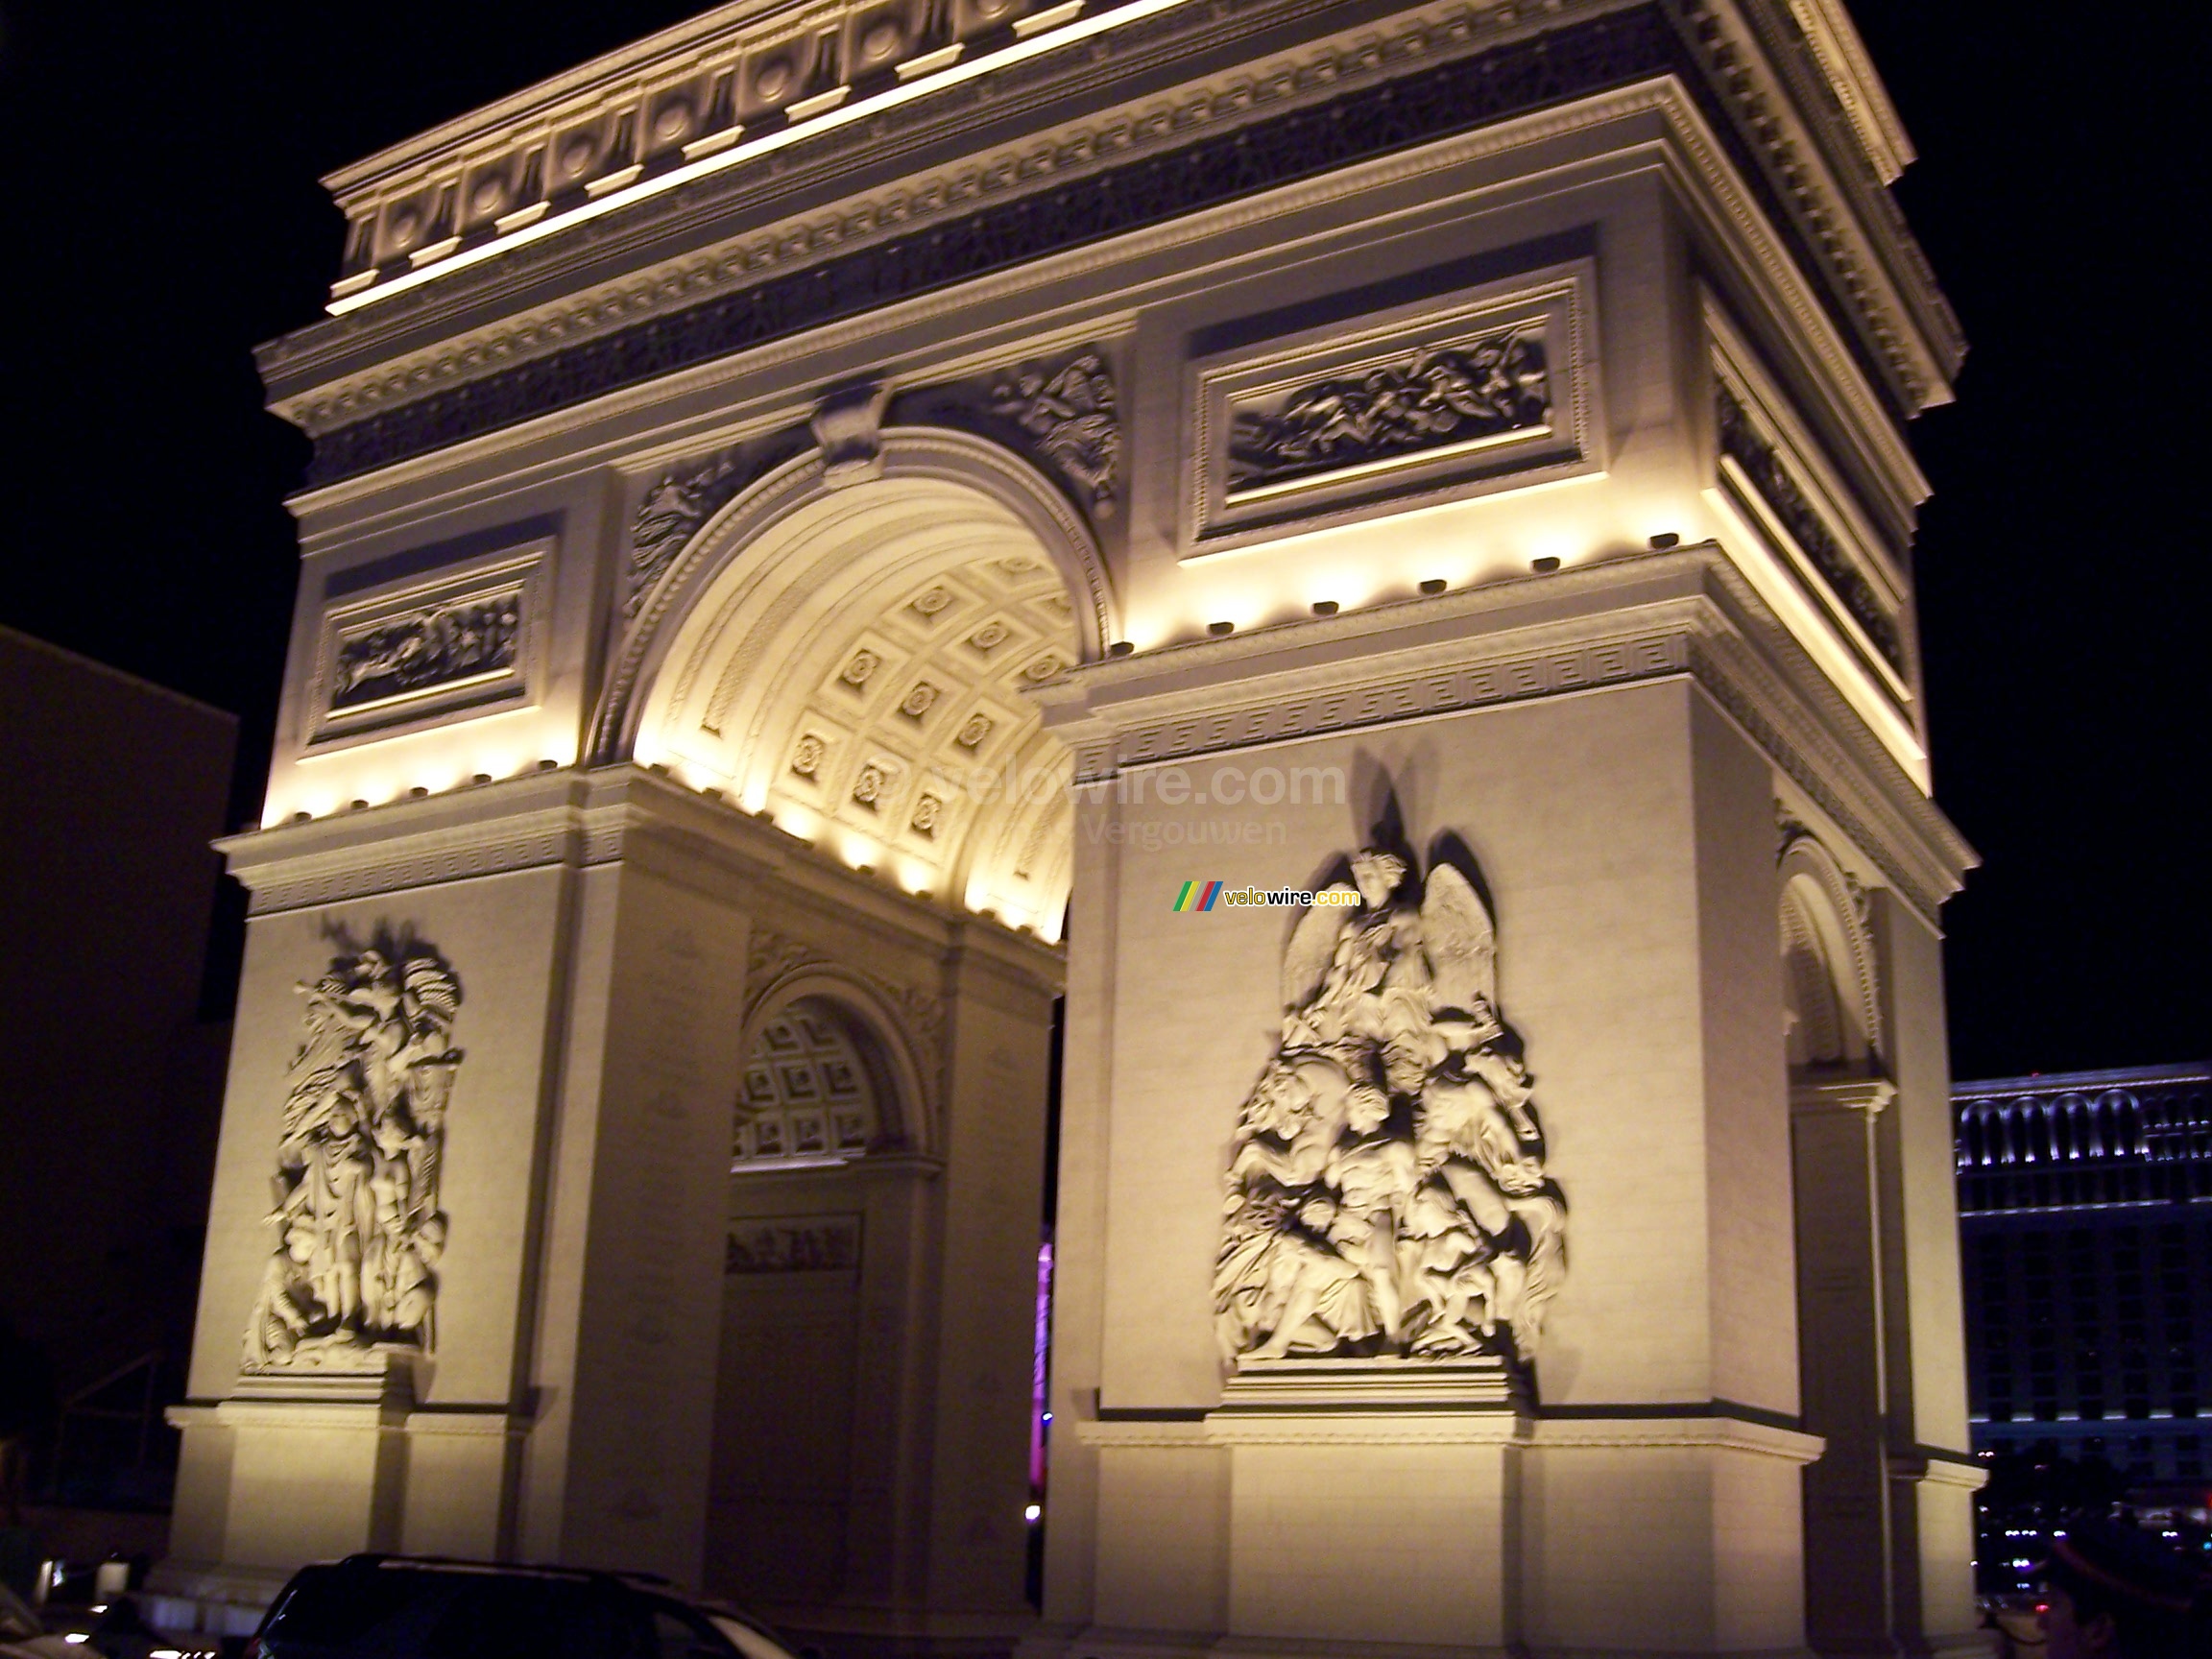 A replic of the Arc de Triomphe